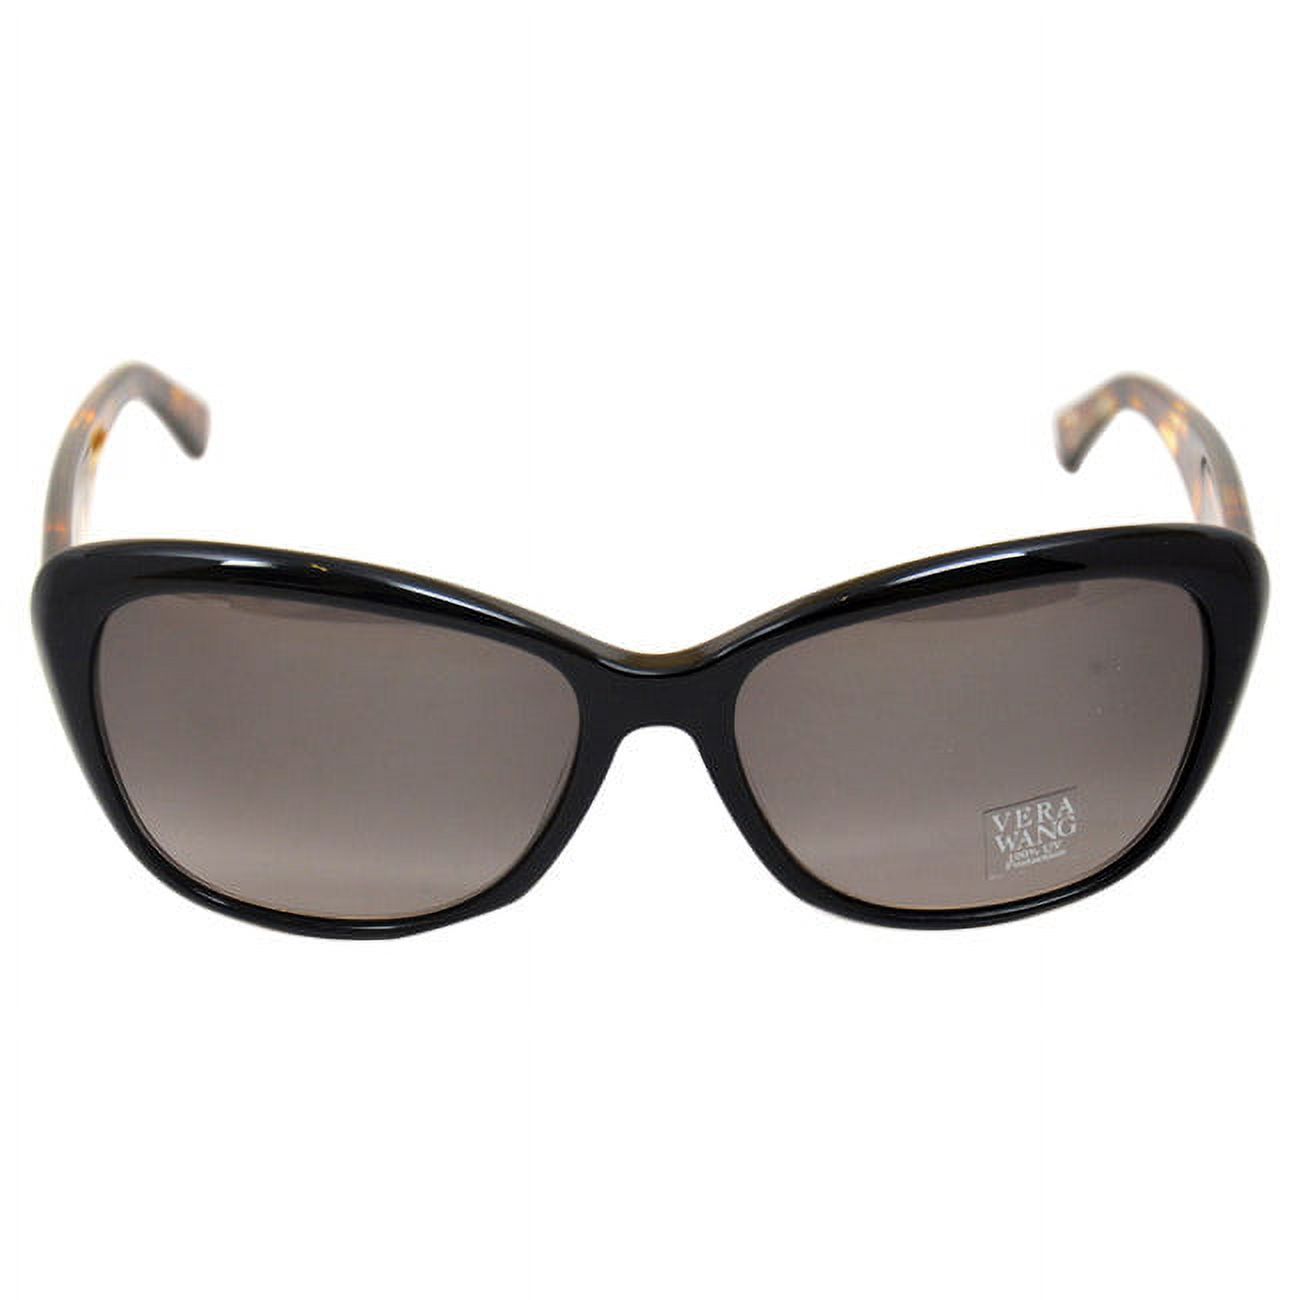 V400 - Black Vera Wang 56-16-140 mm Sunglasses Women - image 3 of 5